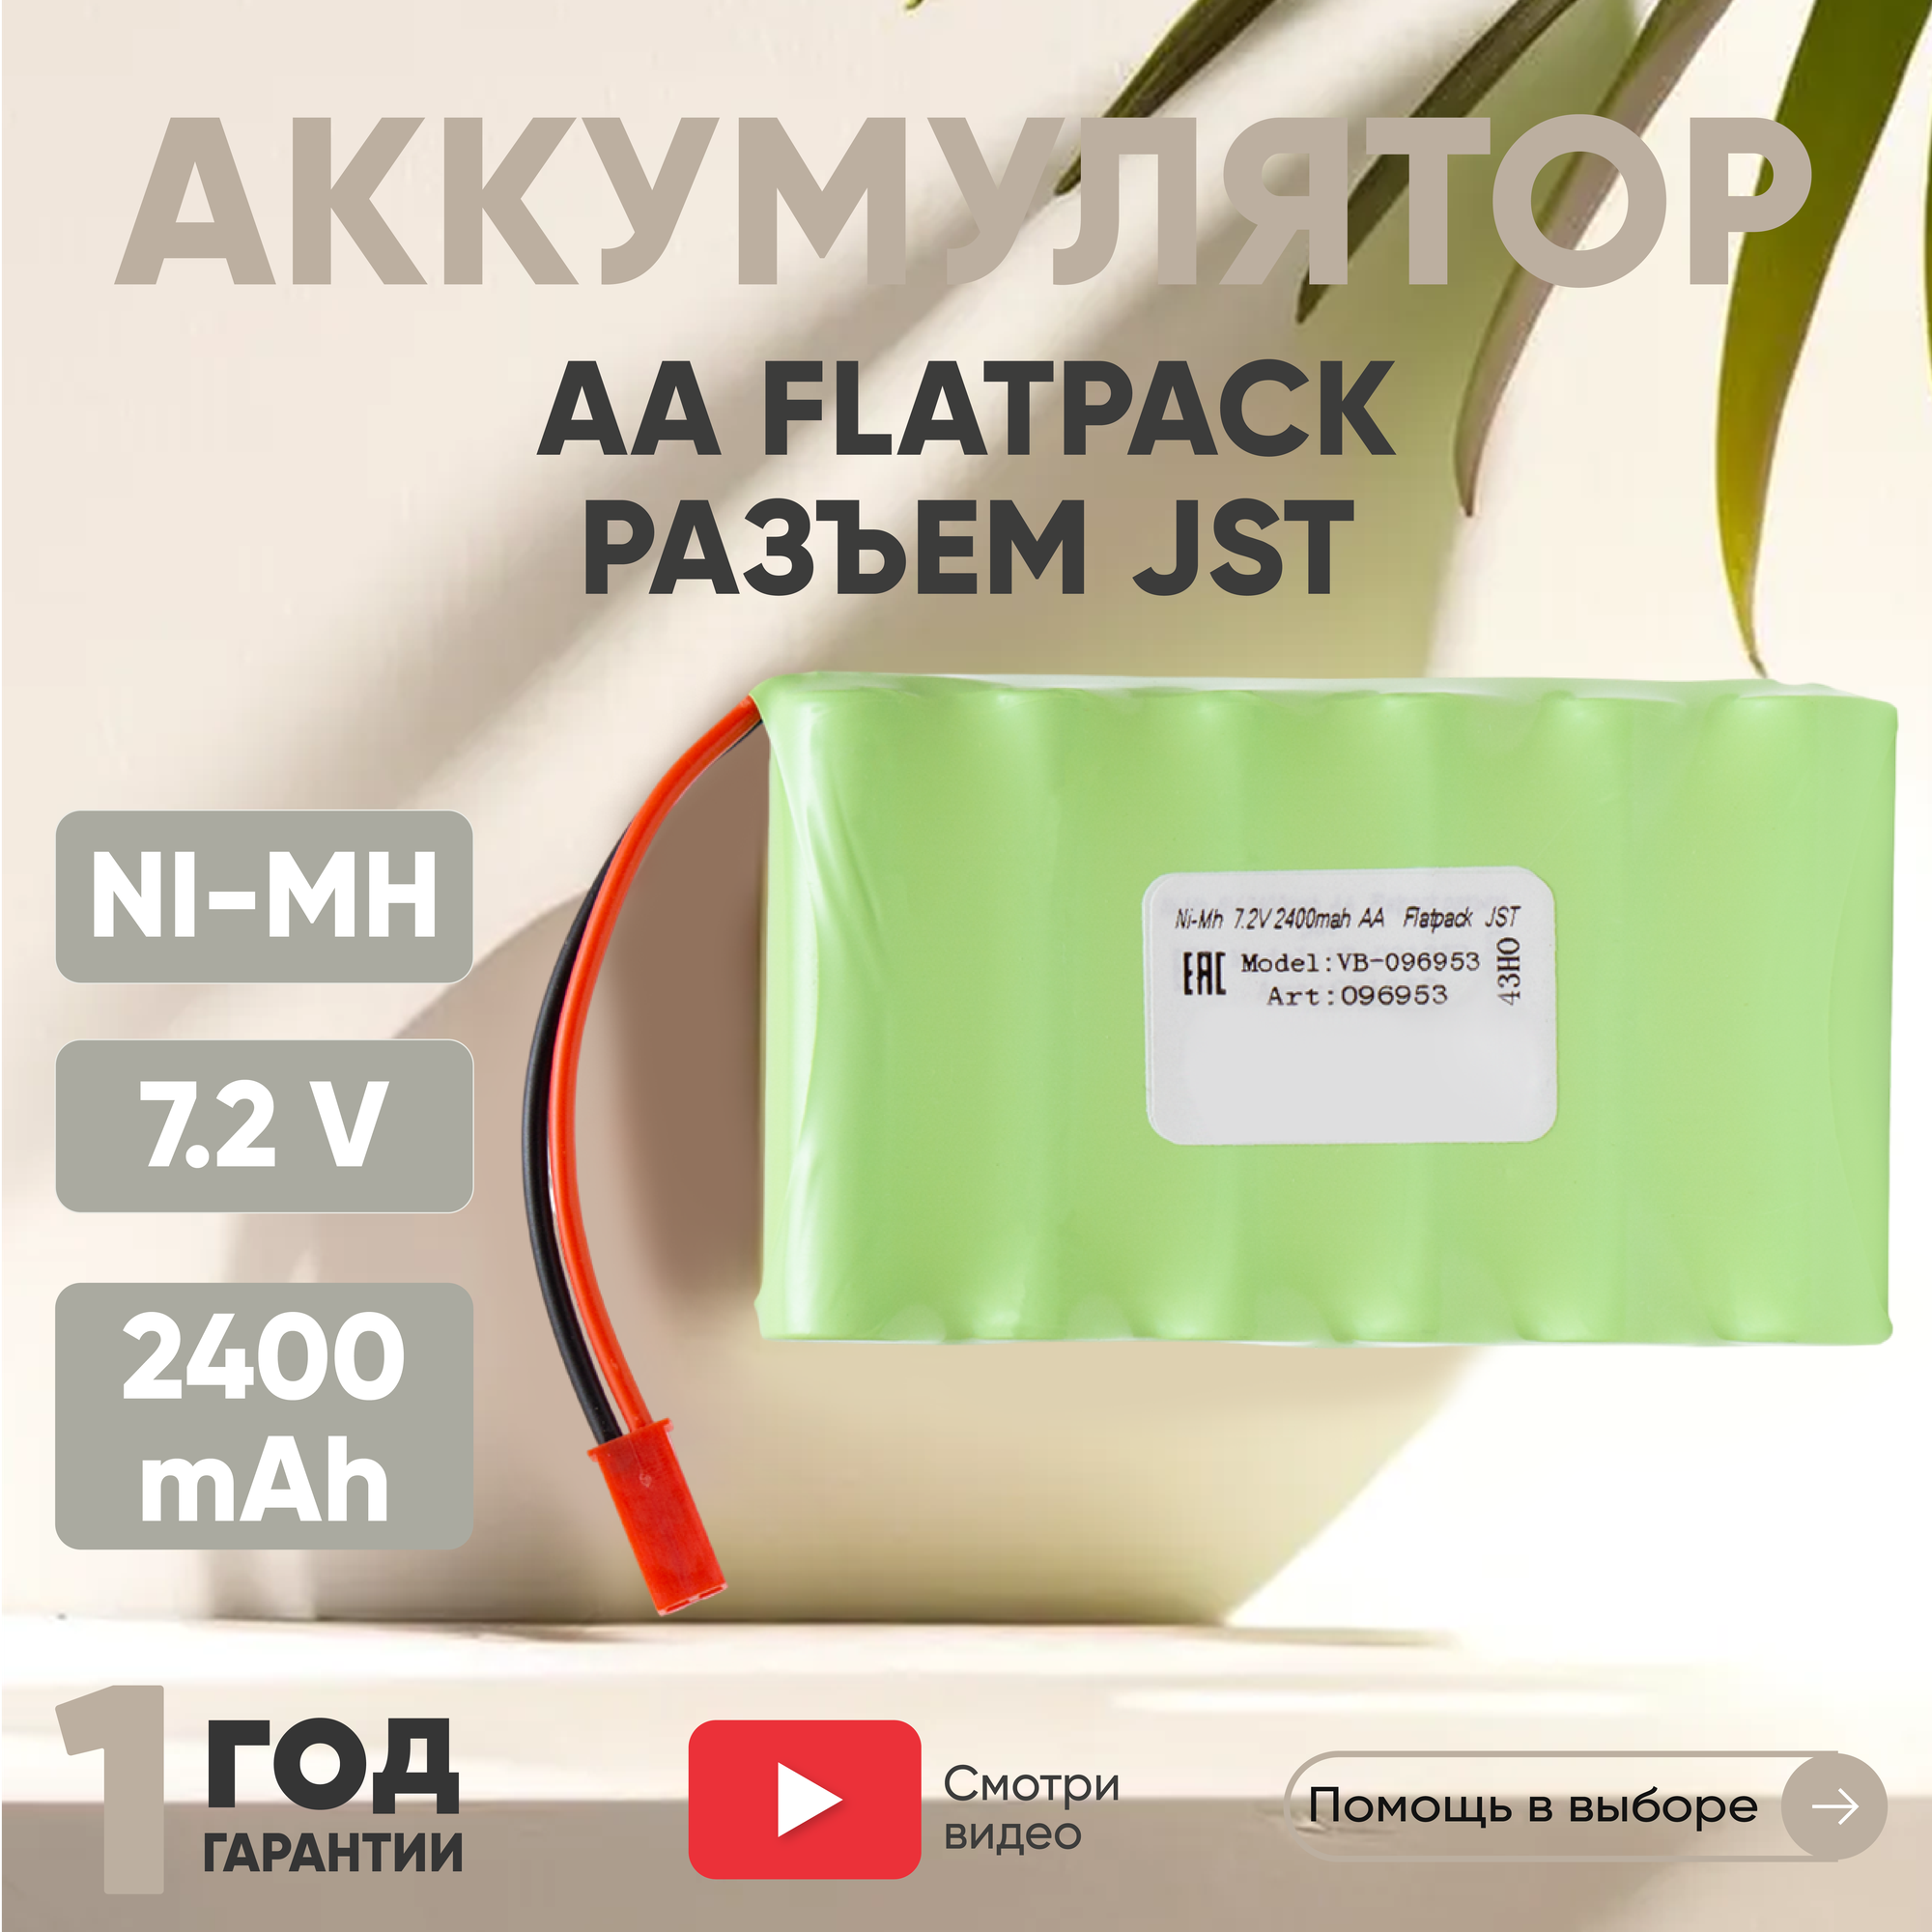 Аккумуляторная батарея (АКБ, аккумулятор) AA Flatpack, разъем JST, 2400мАч, 7.2В, Ni-Mh